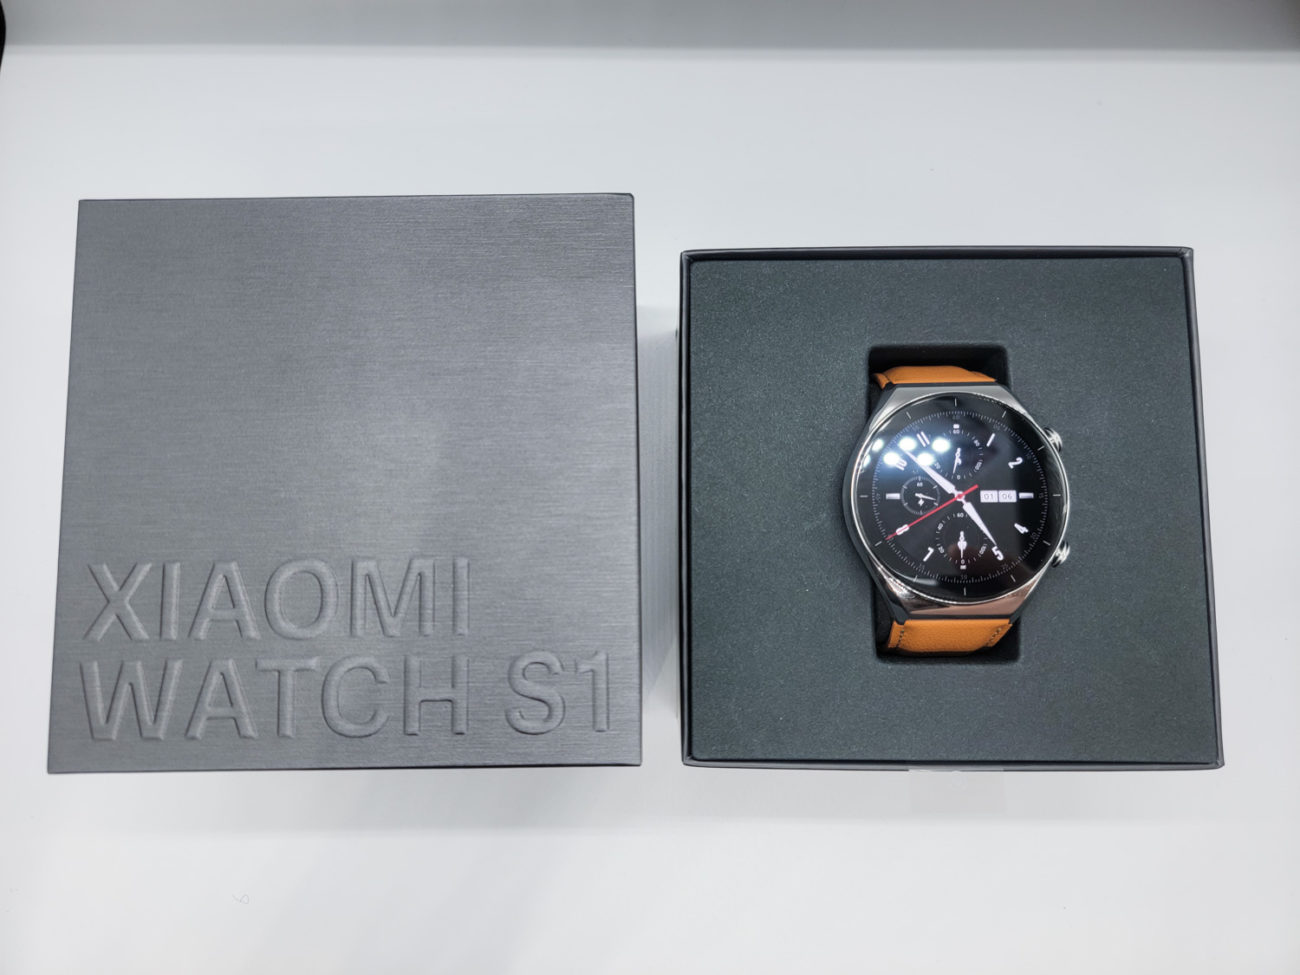 Xiaomi Watch S1 ボックス